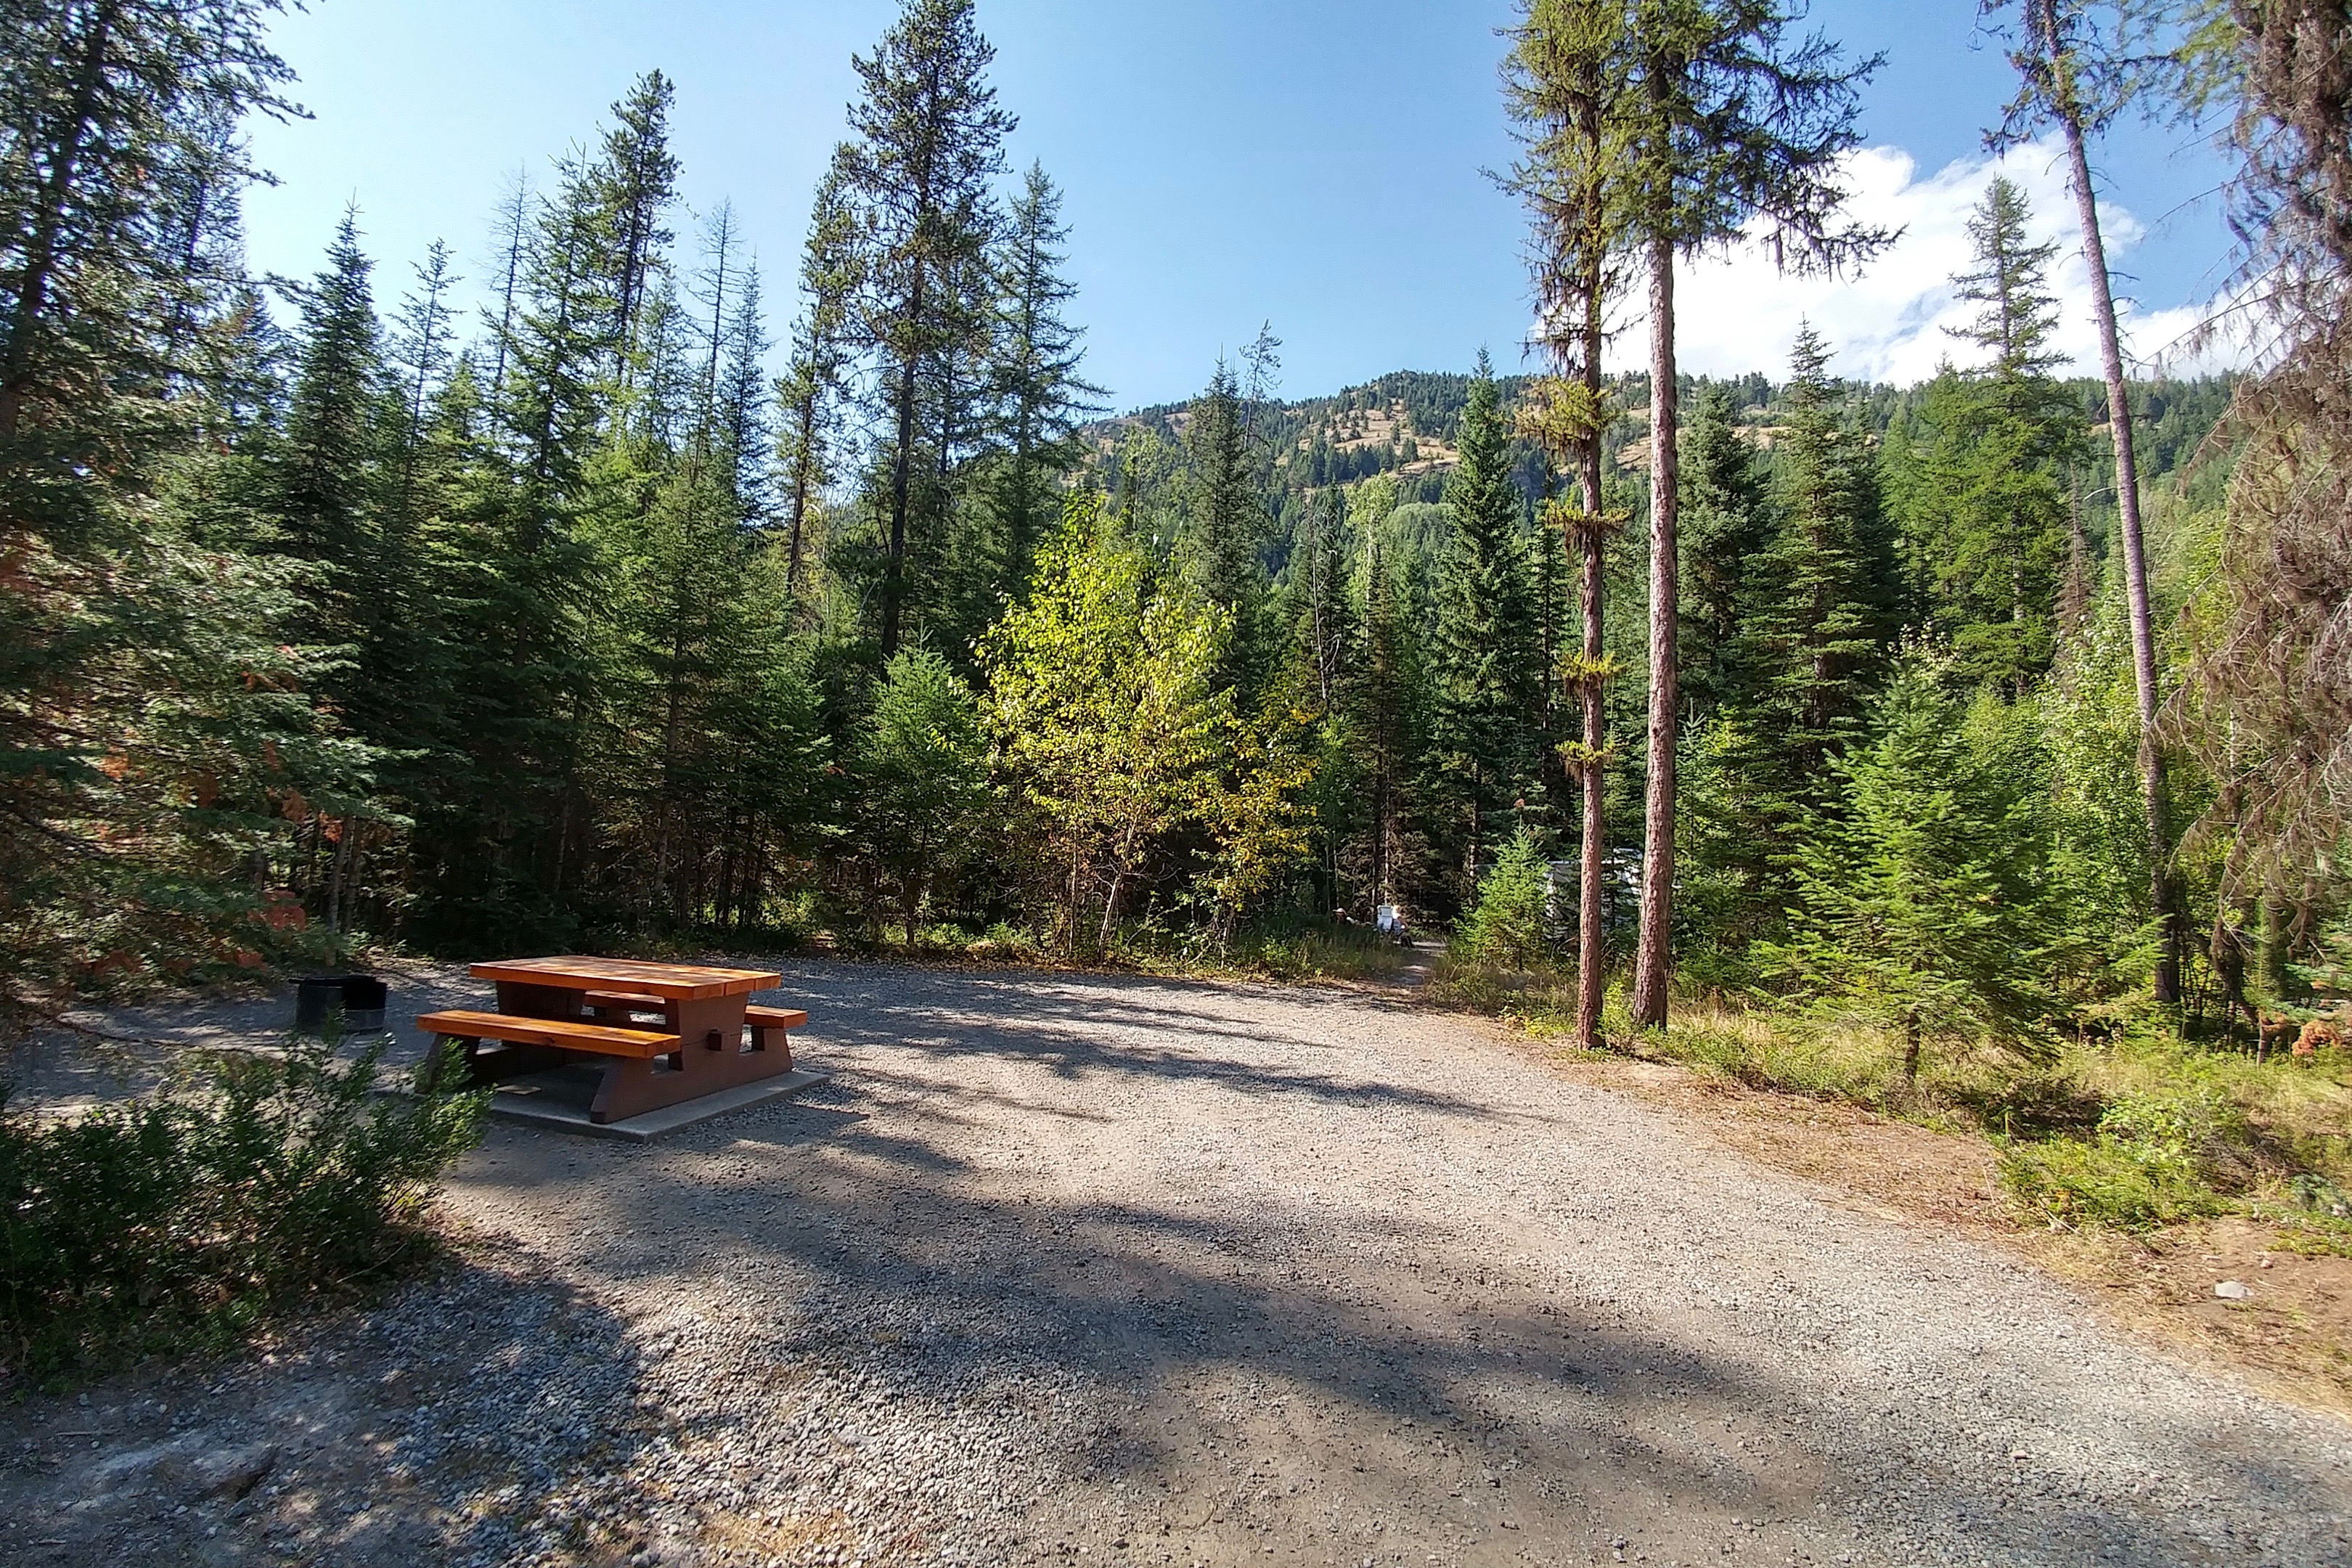 Jewel Lake Provincial Park BC Campground Boundary